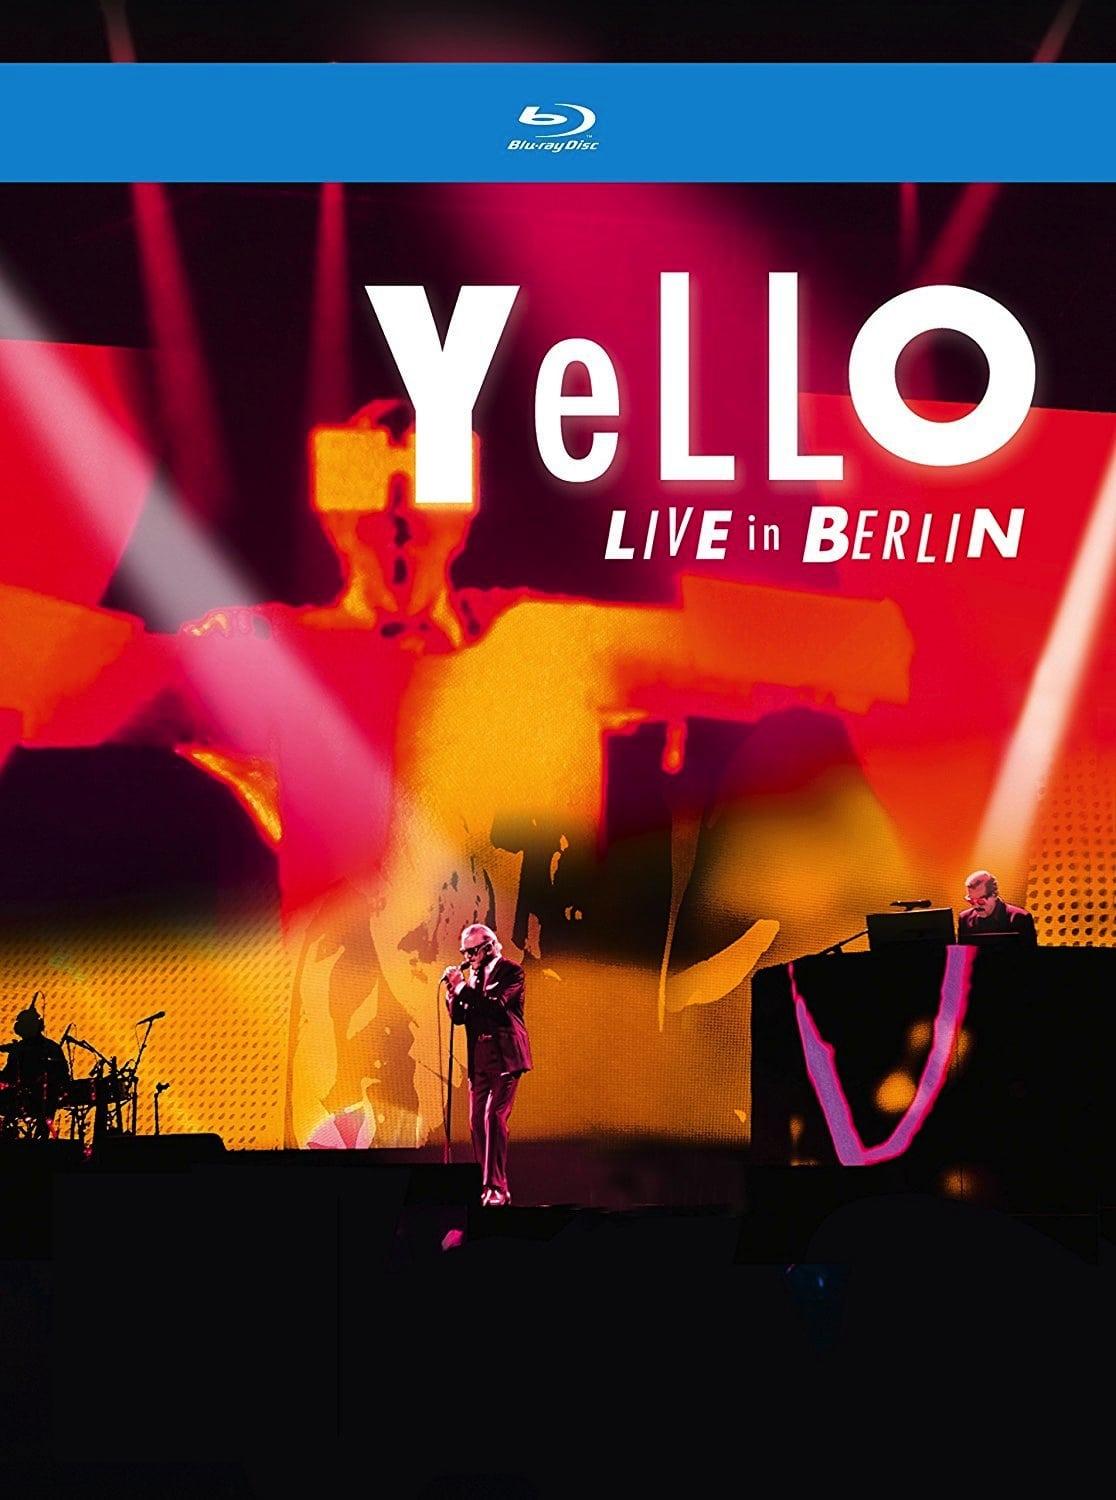 Yello - Live in Berlin poster